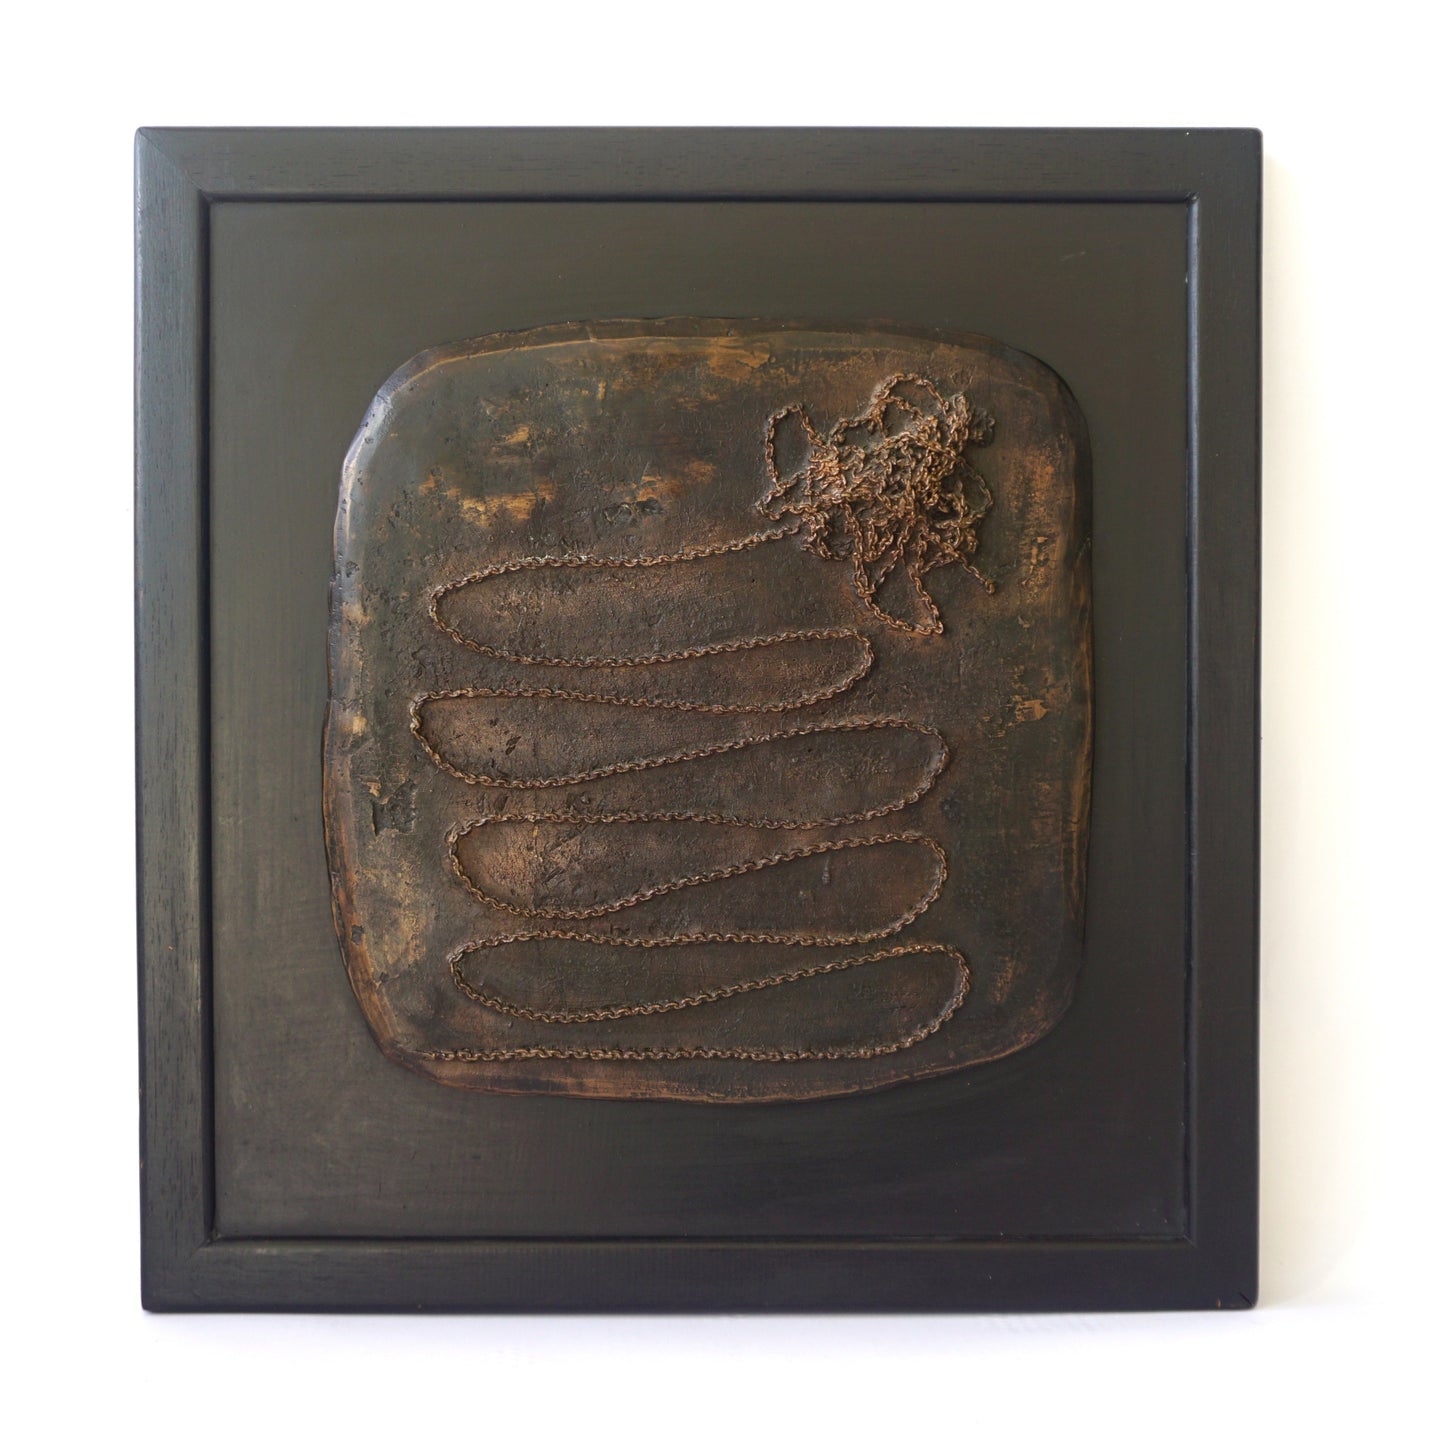 "Chain", bronze plaque on wood